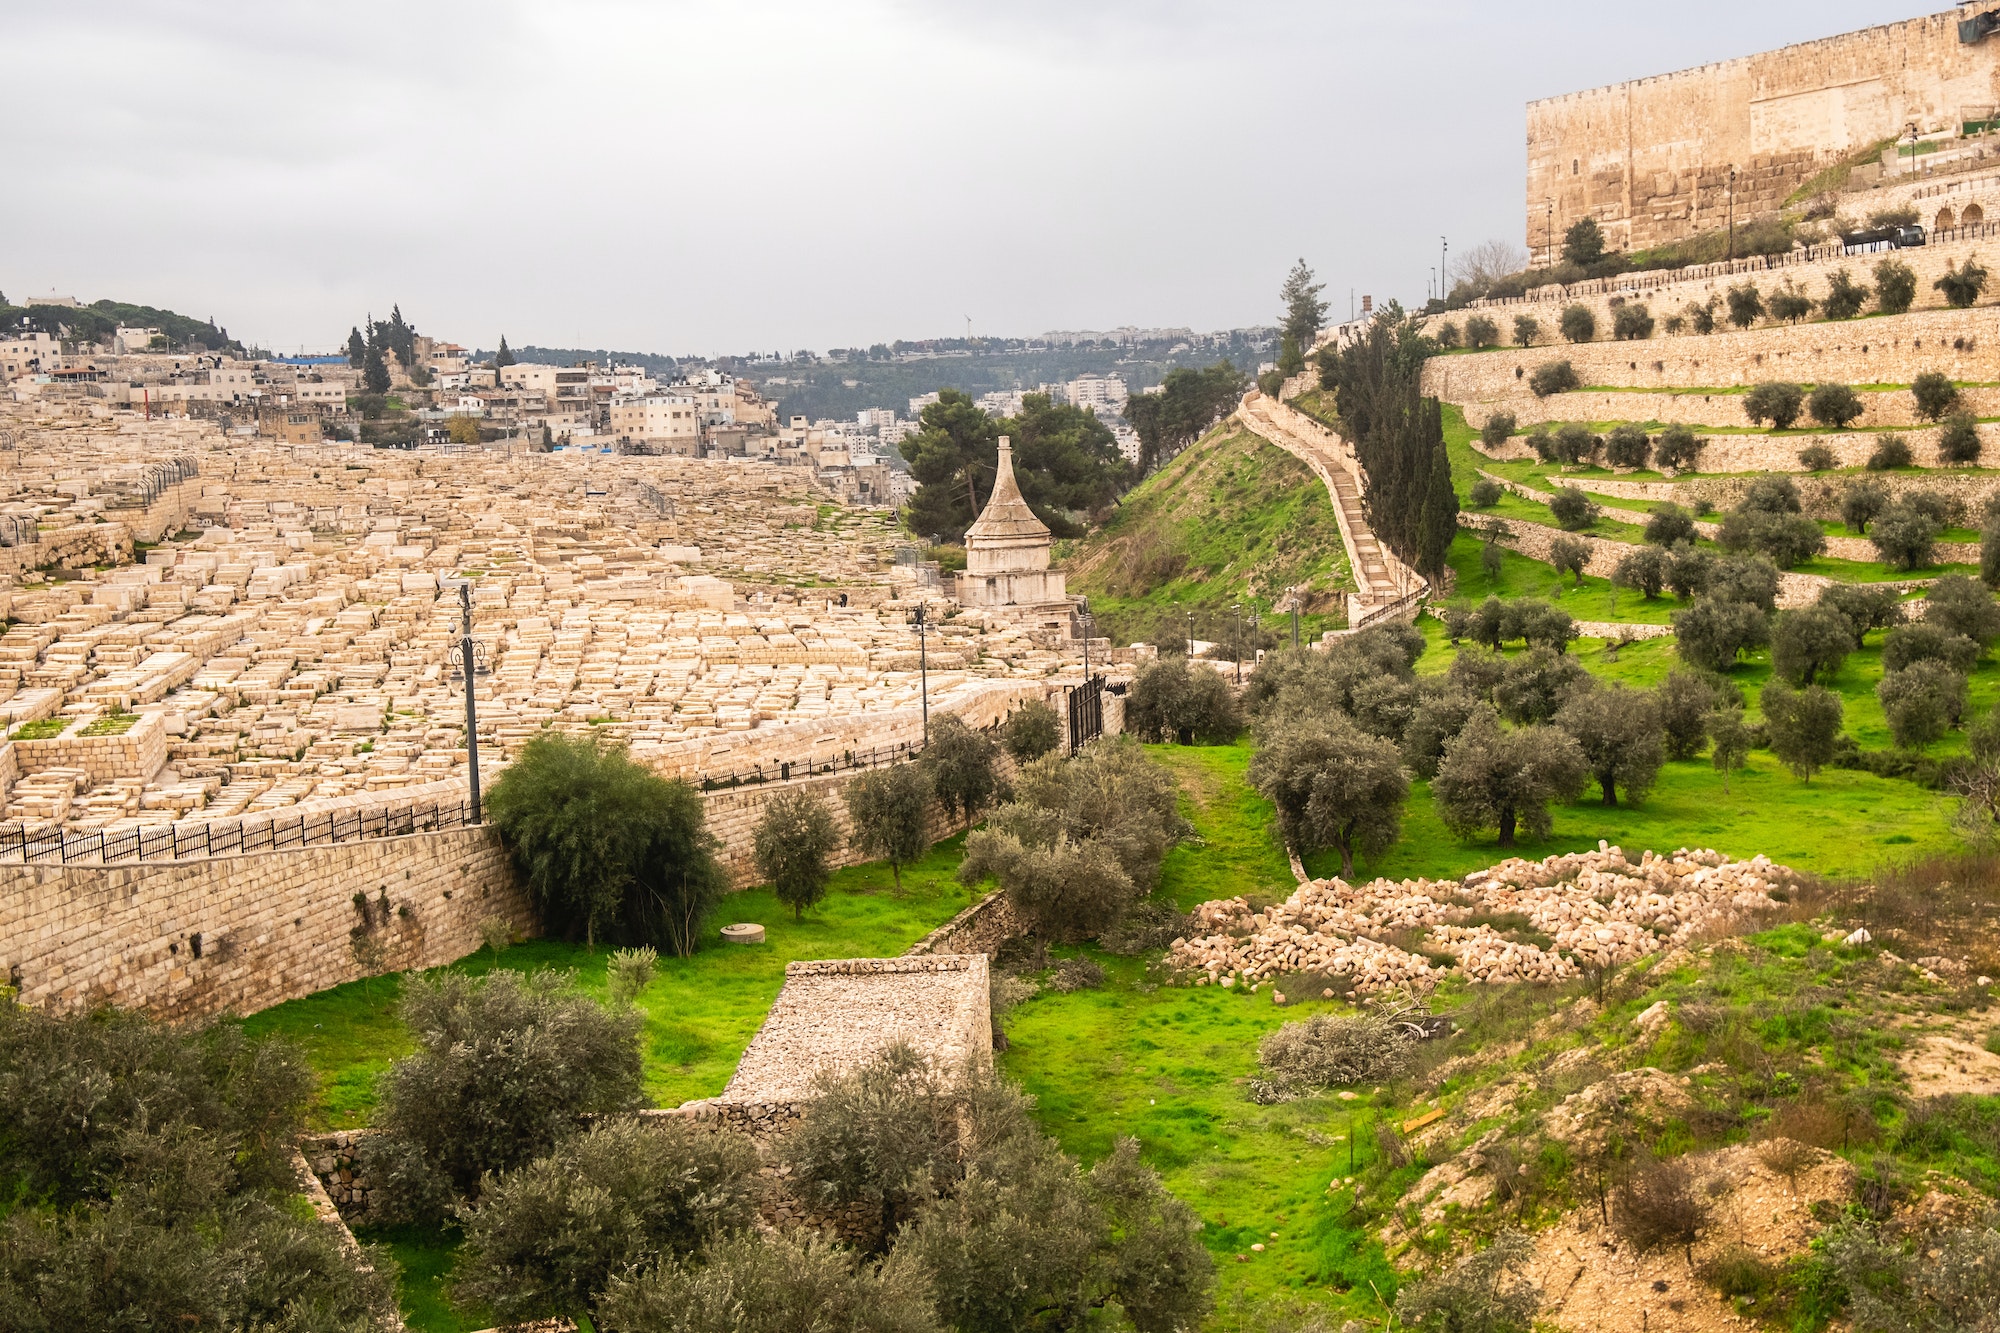 Mount of Olives in Jerusalem. Ancient sacred cemetery